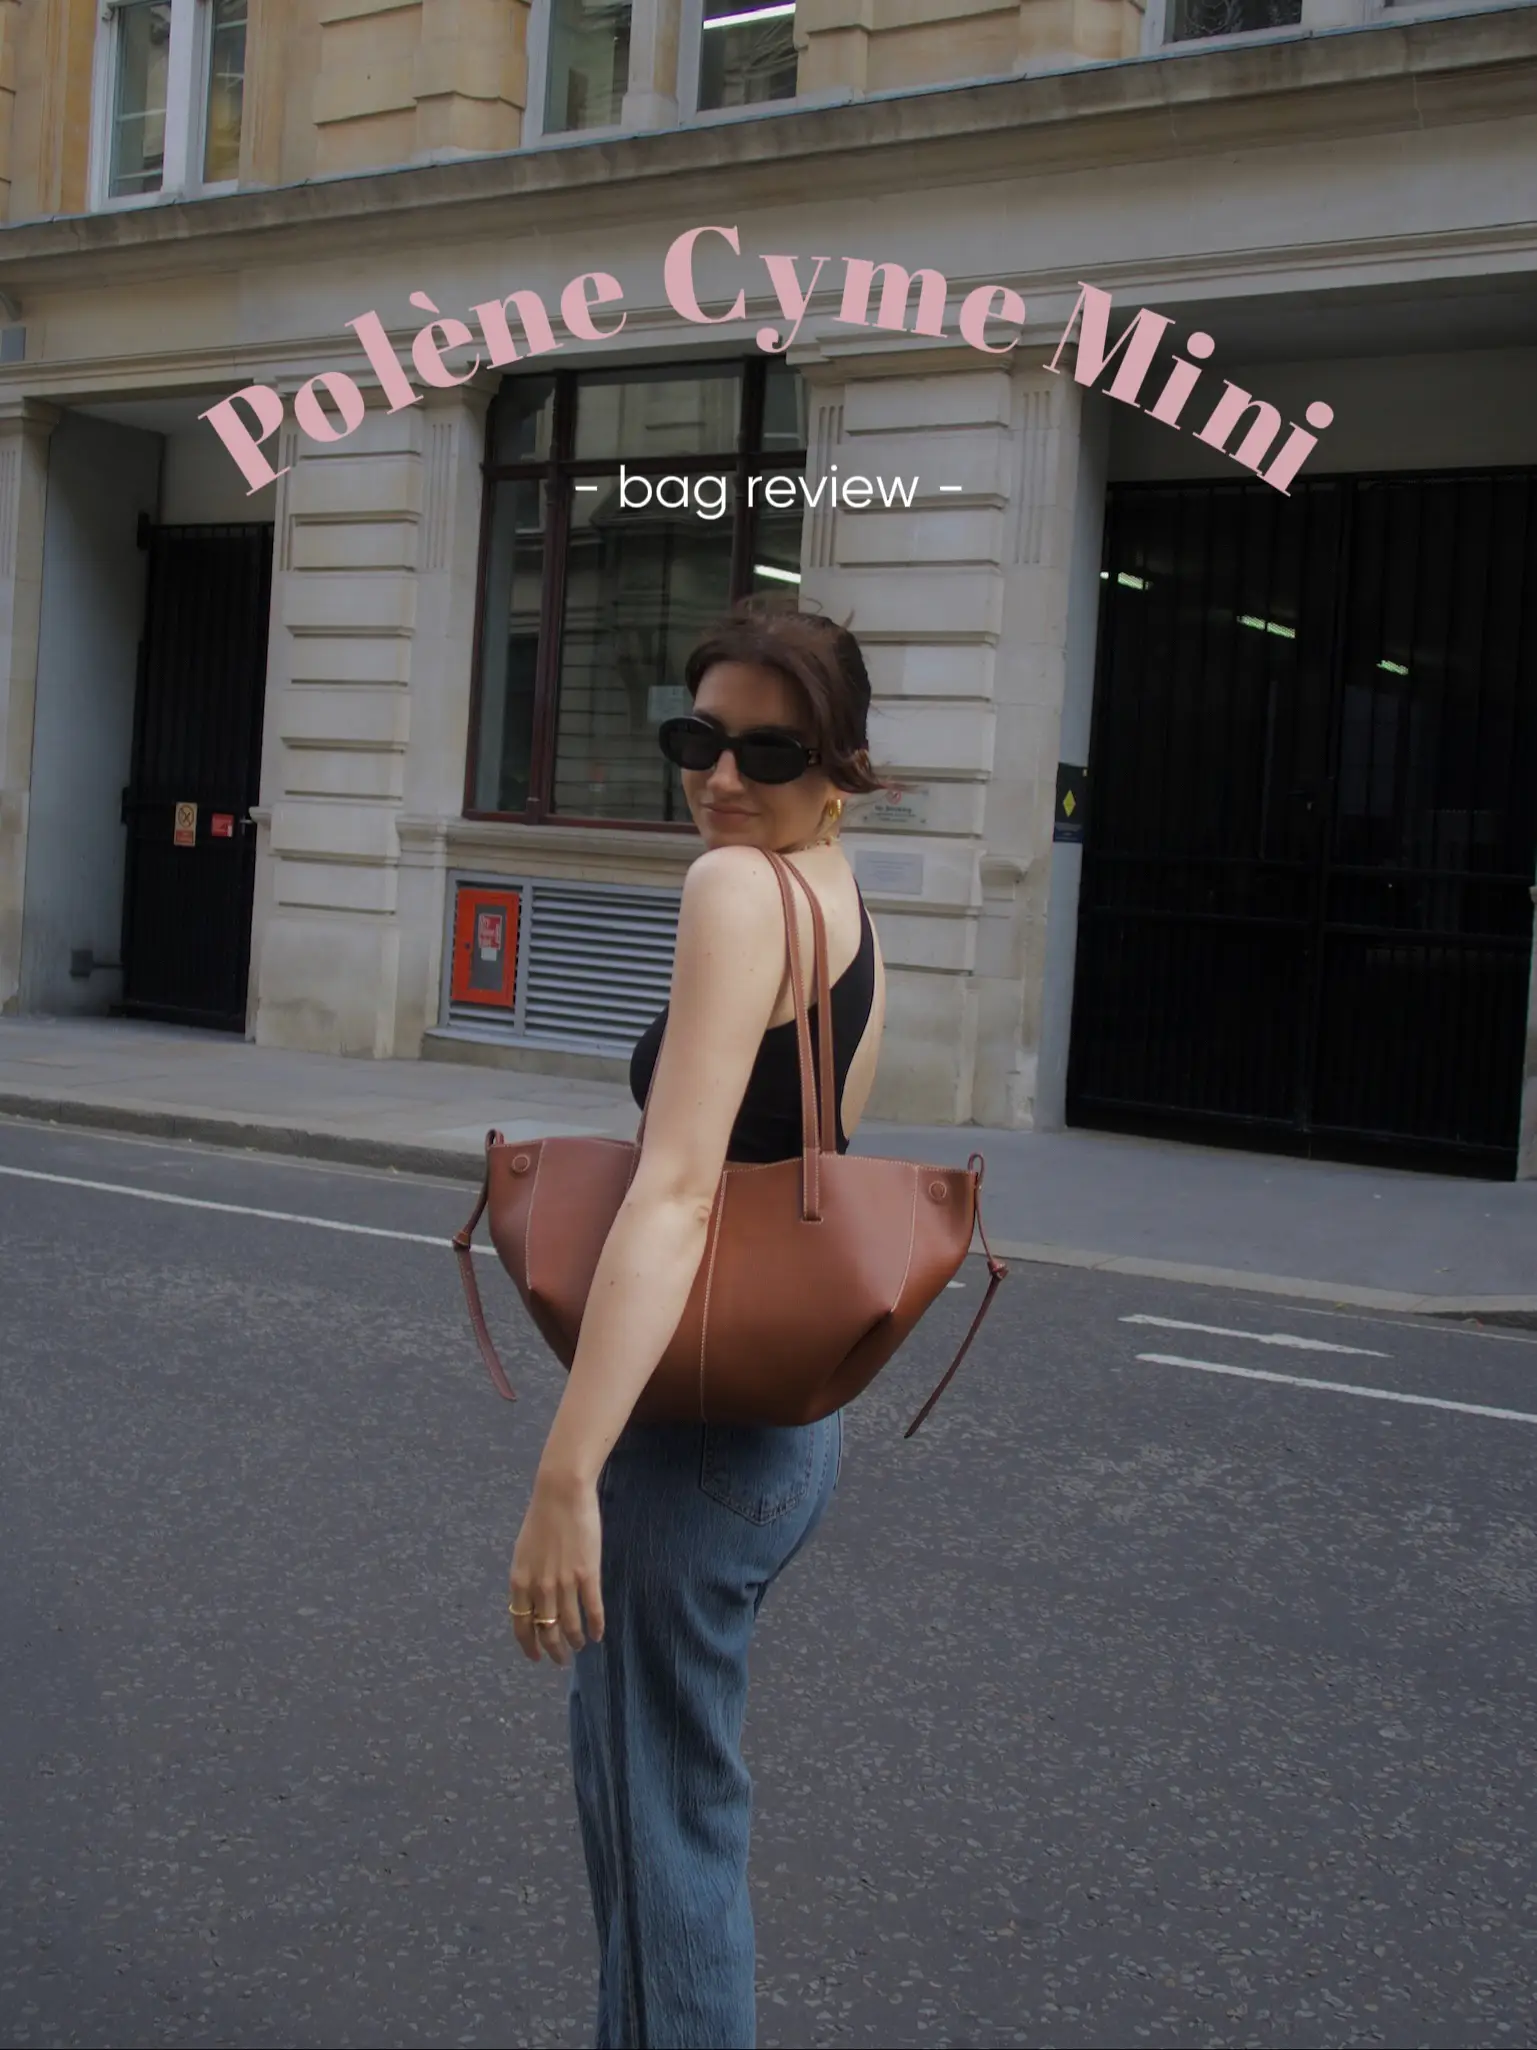 Polène Paris - Cyme review, Gallery posted by Loewie8